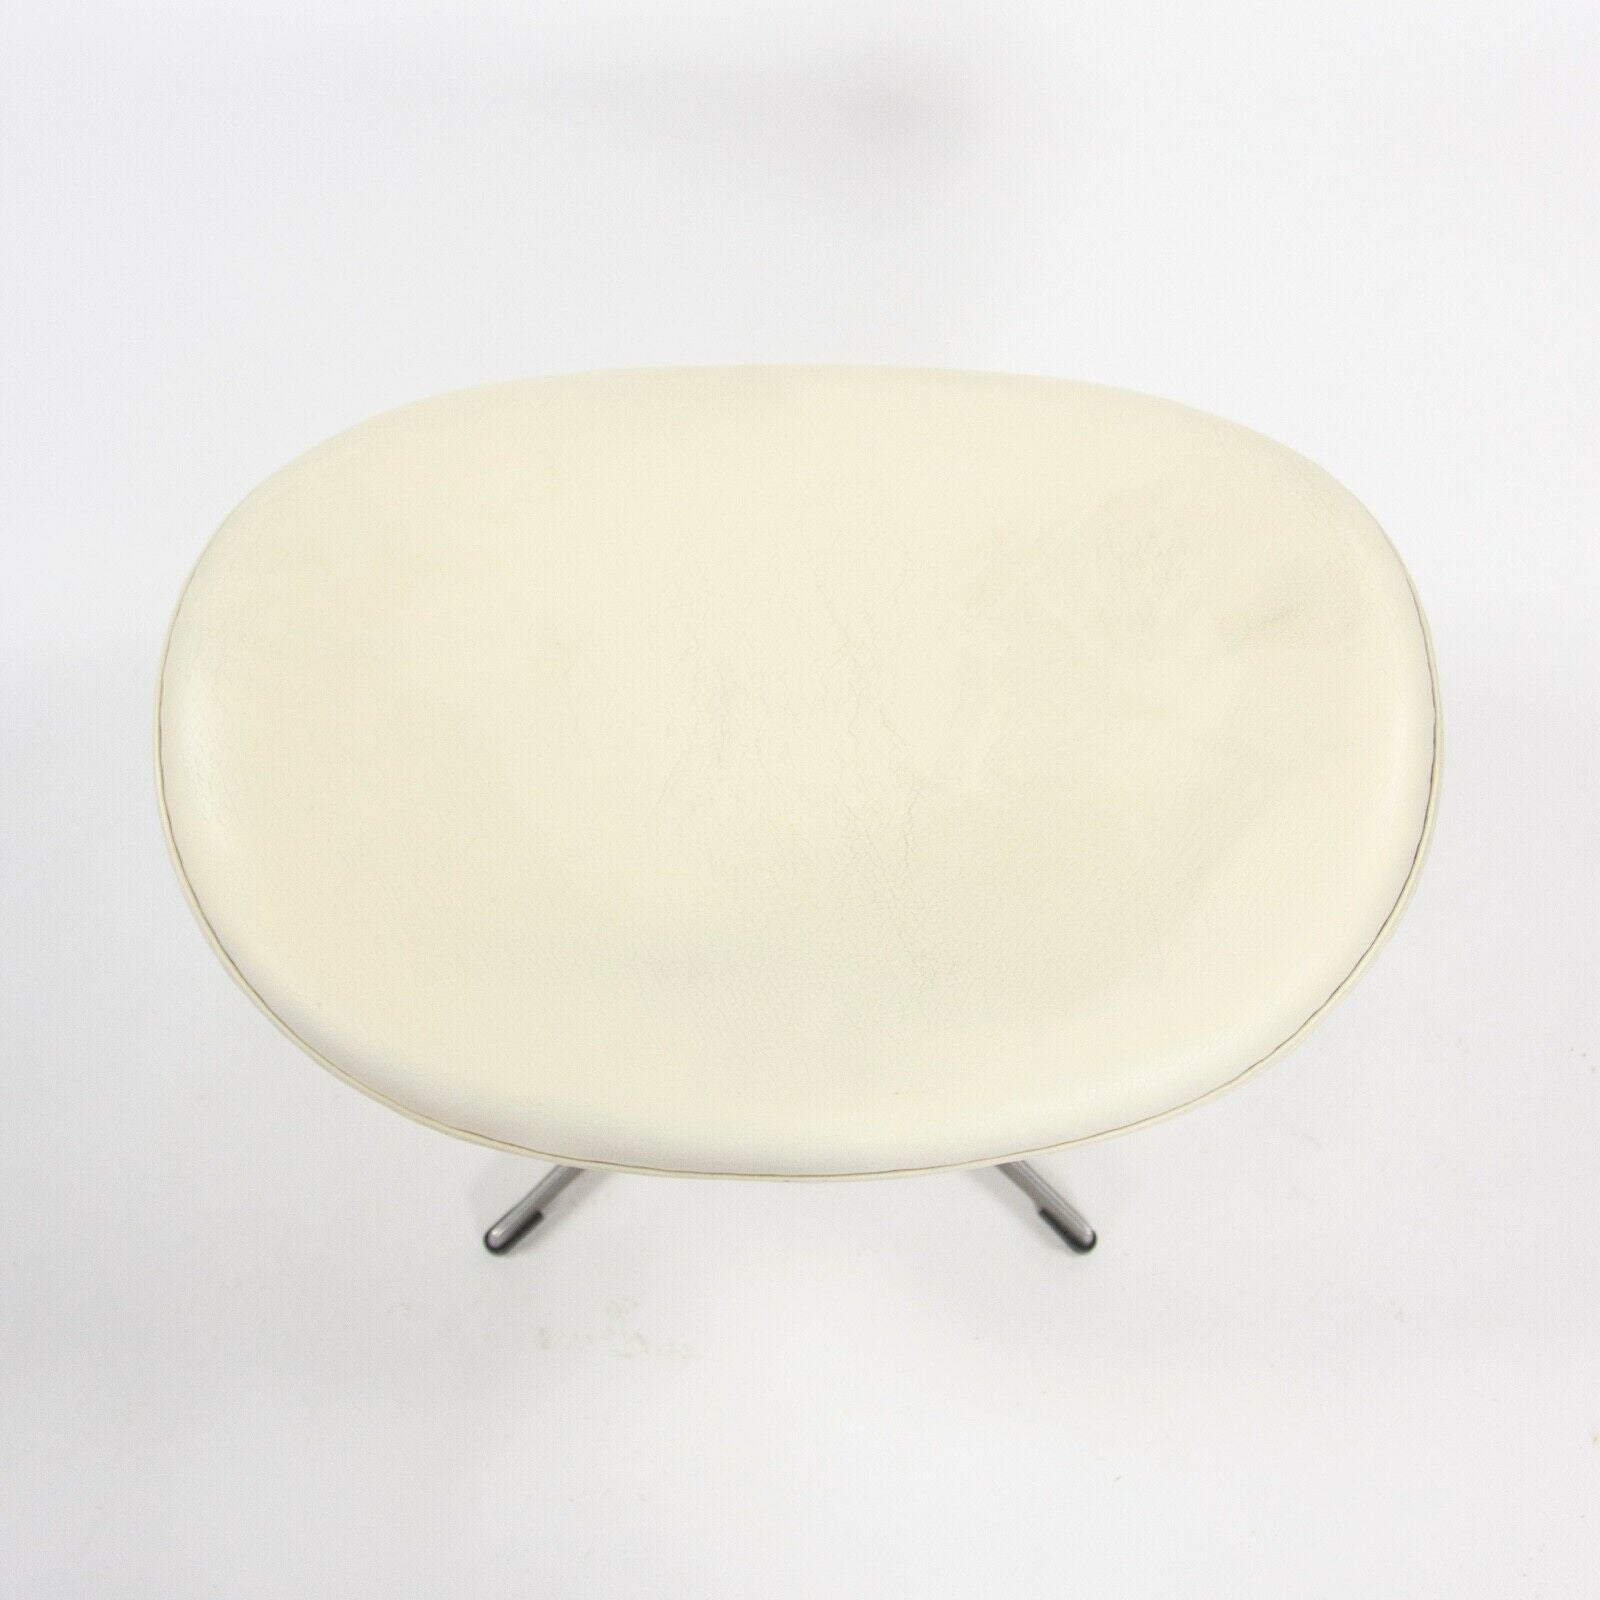 1998 Arne Jacobsen for Fritz Hansen White Leather Egg Chair with Ottoman